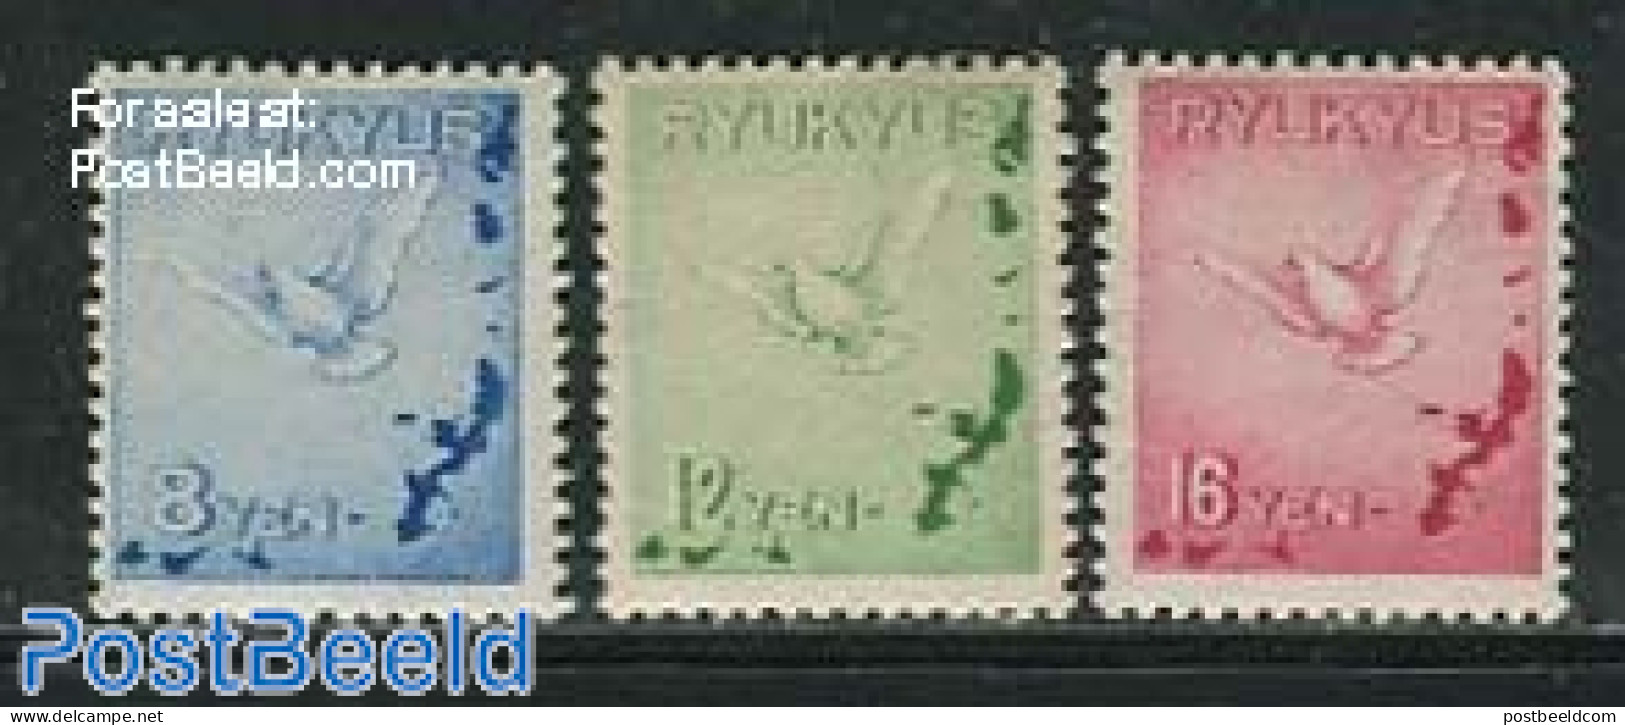 Ryu-Kyu 1950 Definitives, Pigeon 3v, Mint NH, Nature - Birds - Ryukyu Islands